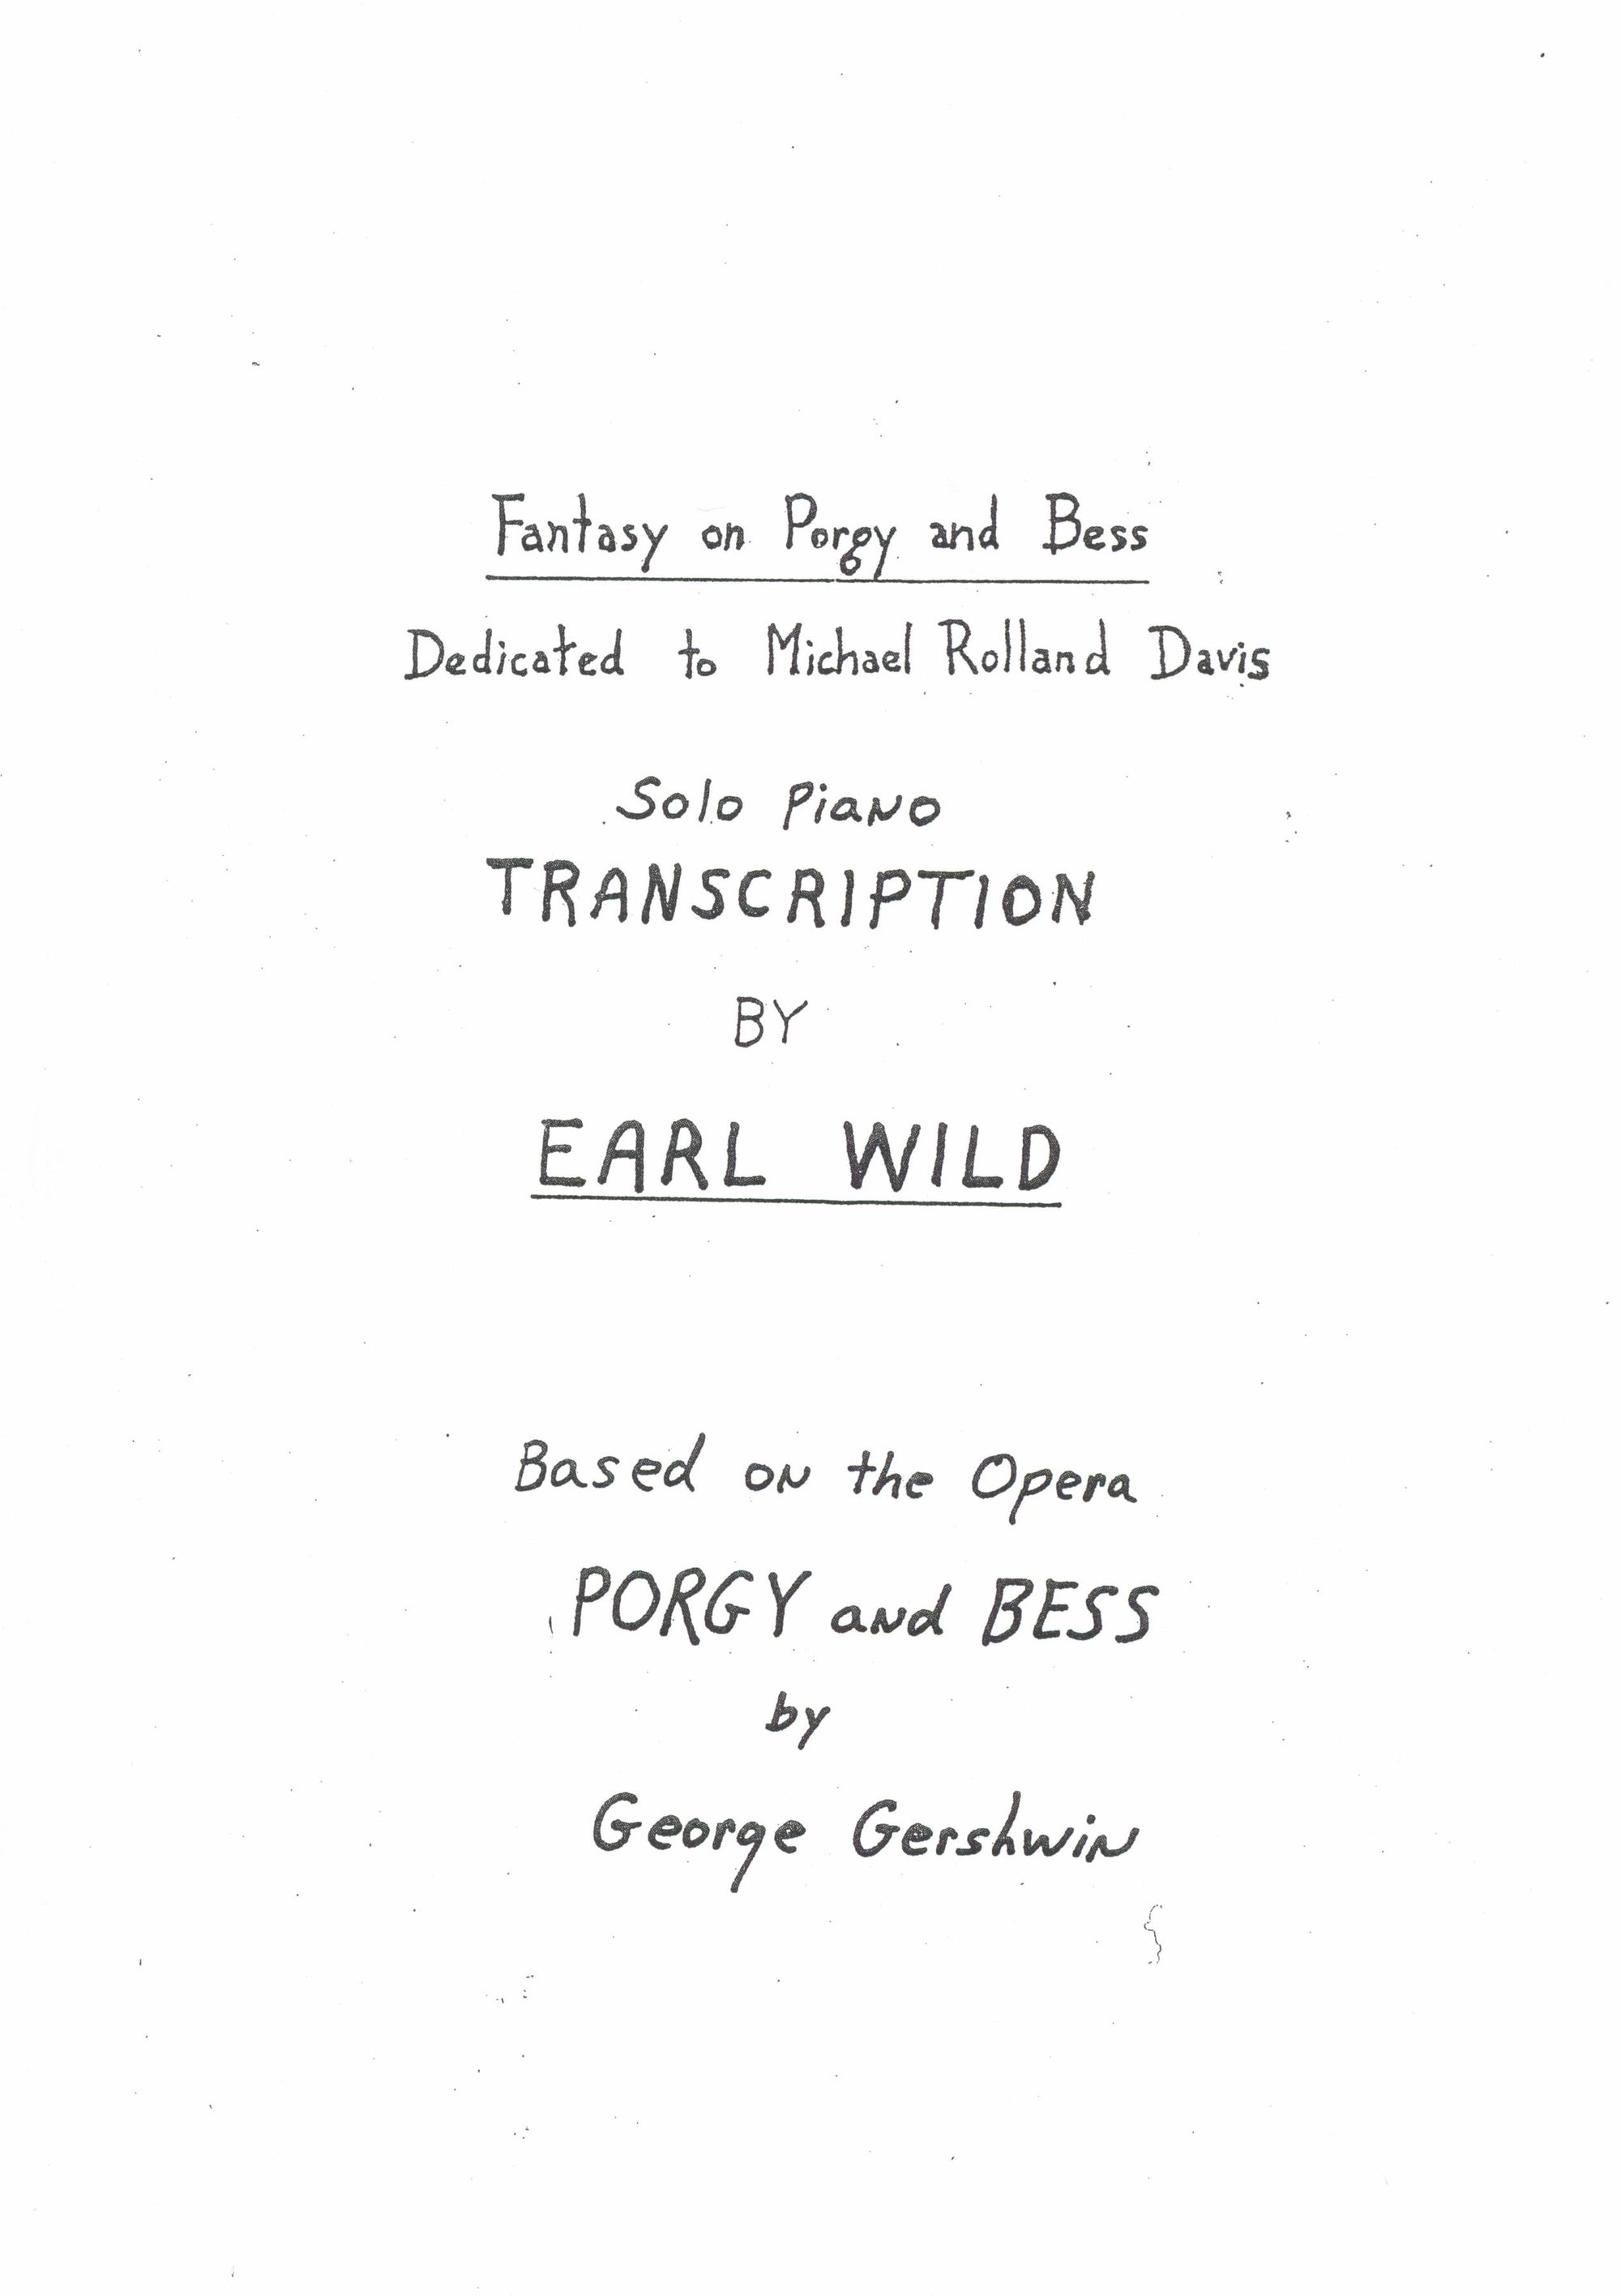 Wild: Grande Fantasy on "Porgy and Bess"